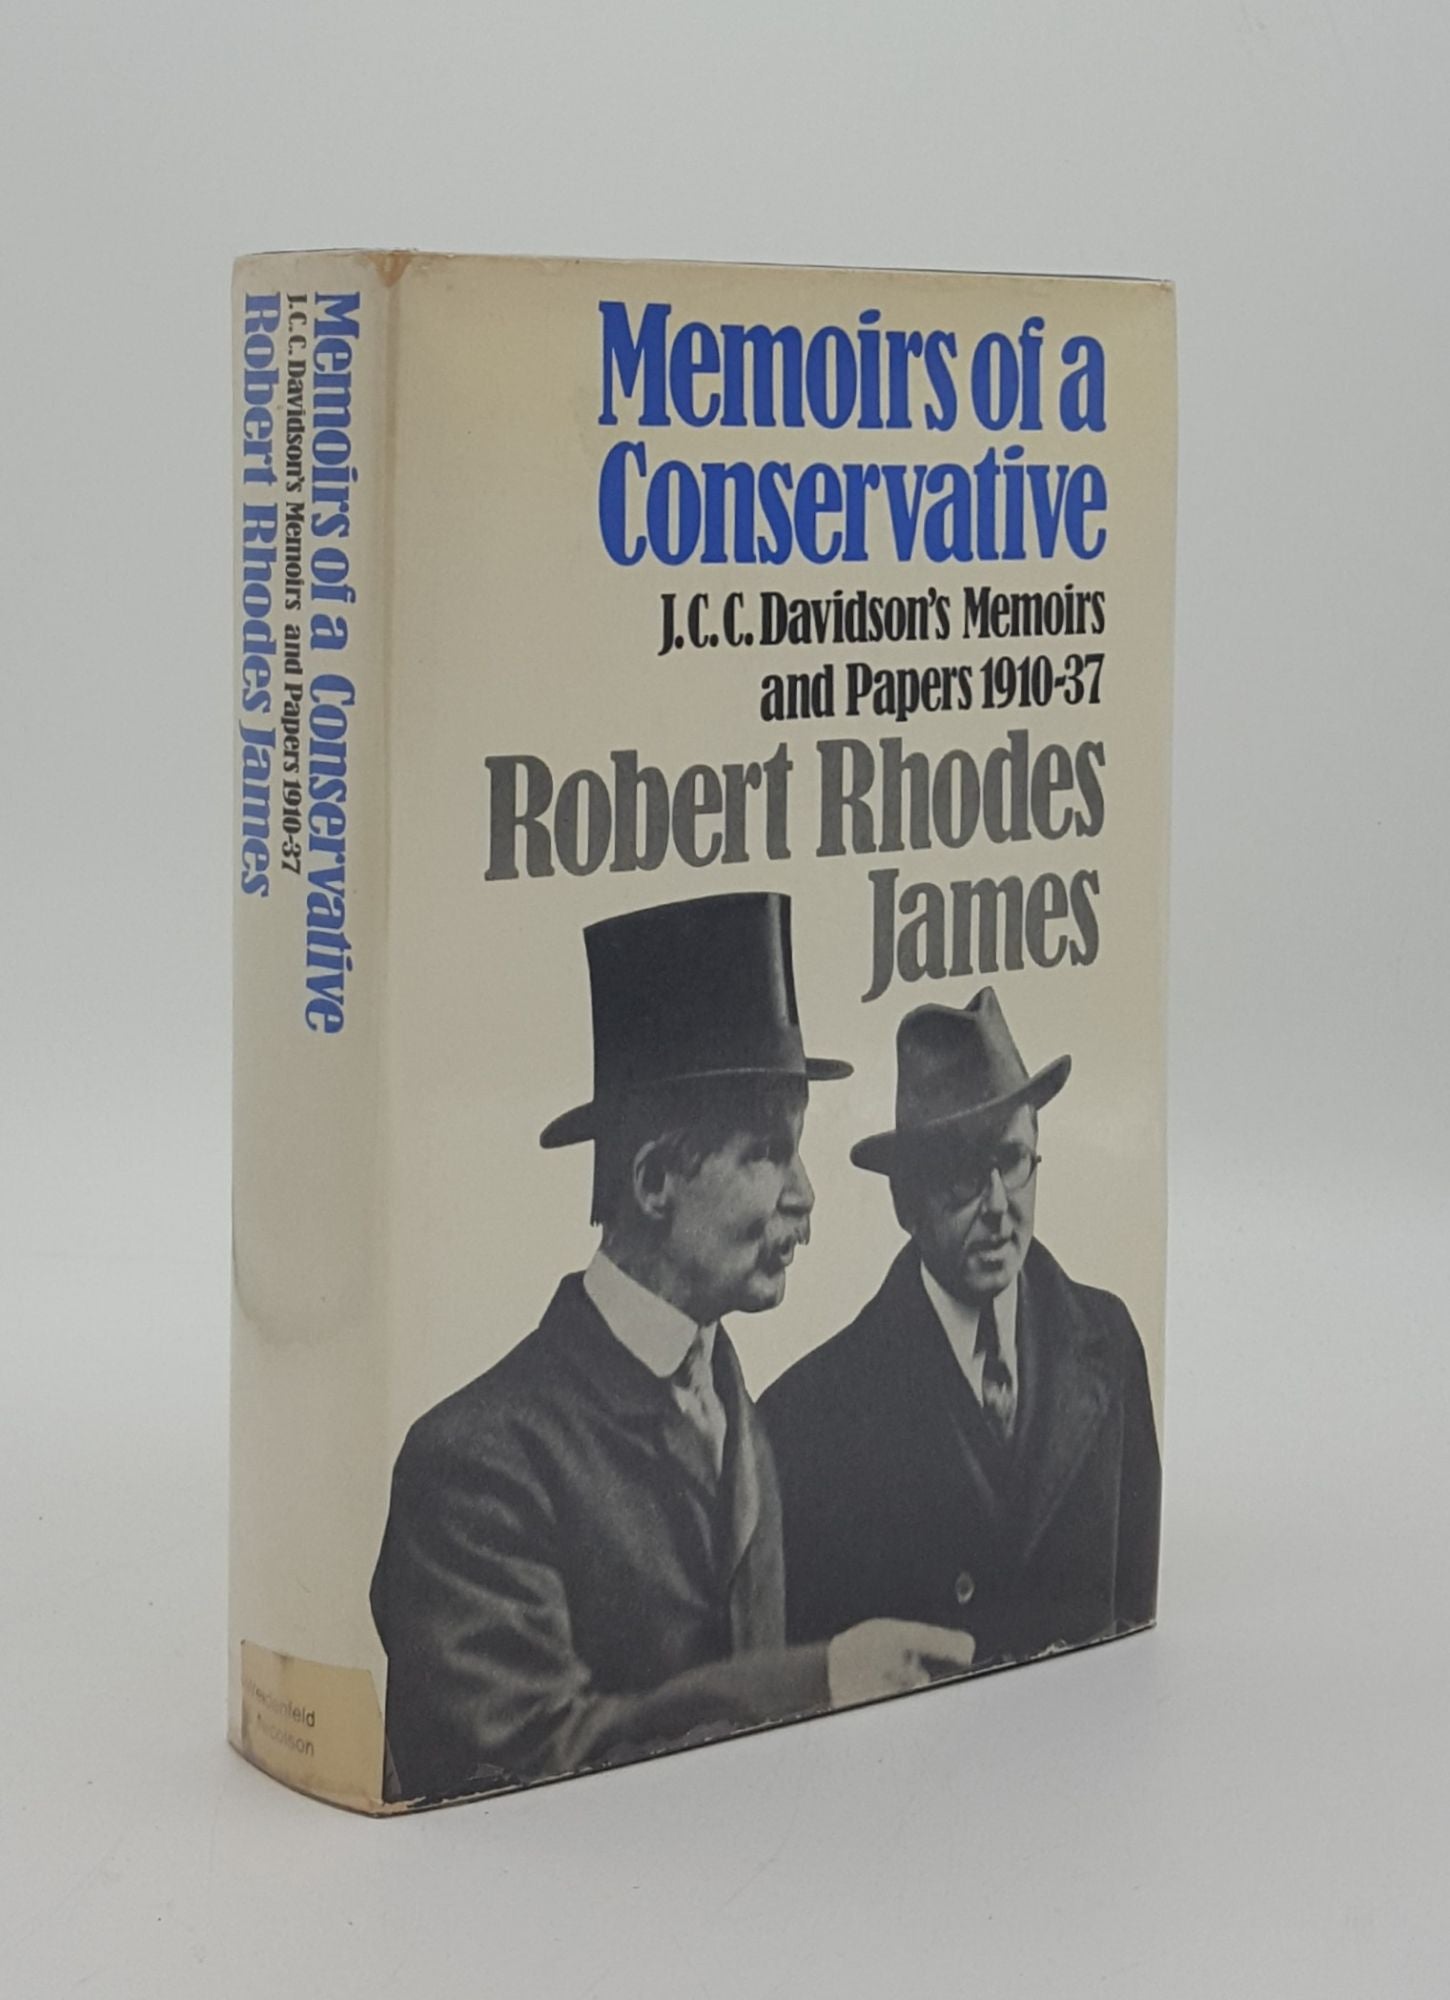 DAVIDSON J.C.C., RHODES JAMES Robert - Memoirs of a Conservative J.C. C. Davidson's Memoirs and Papers 1910-37